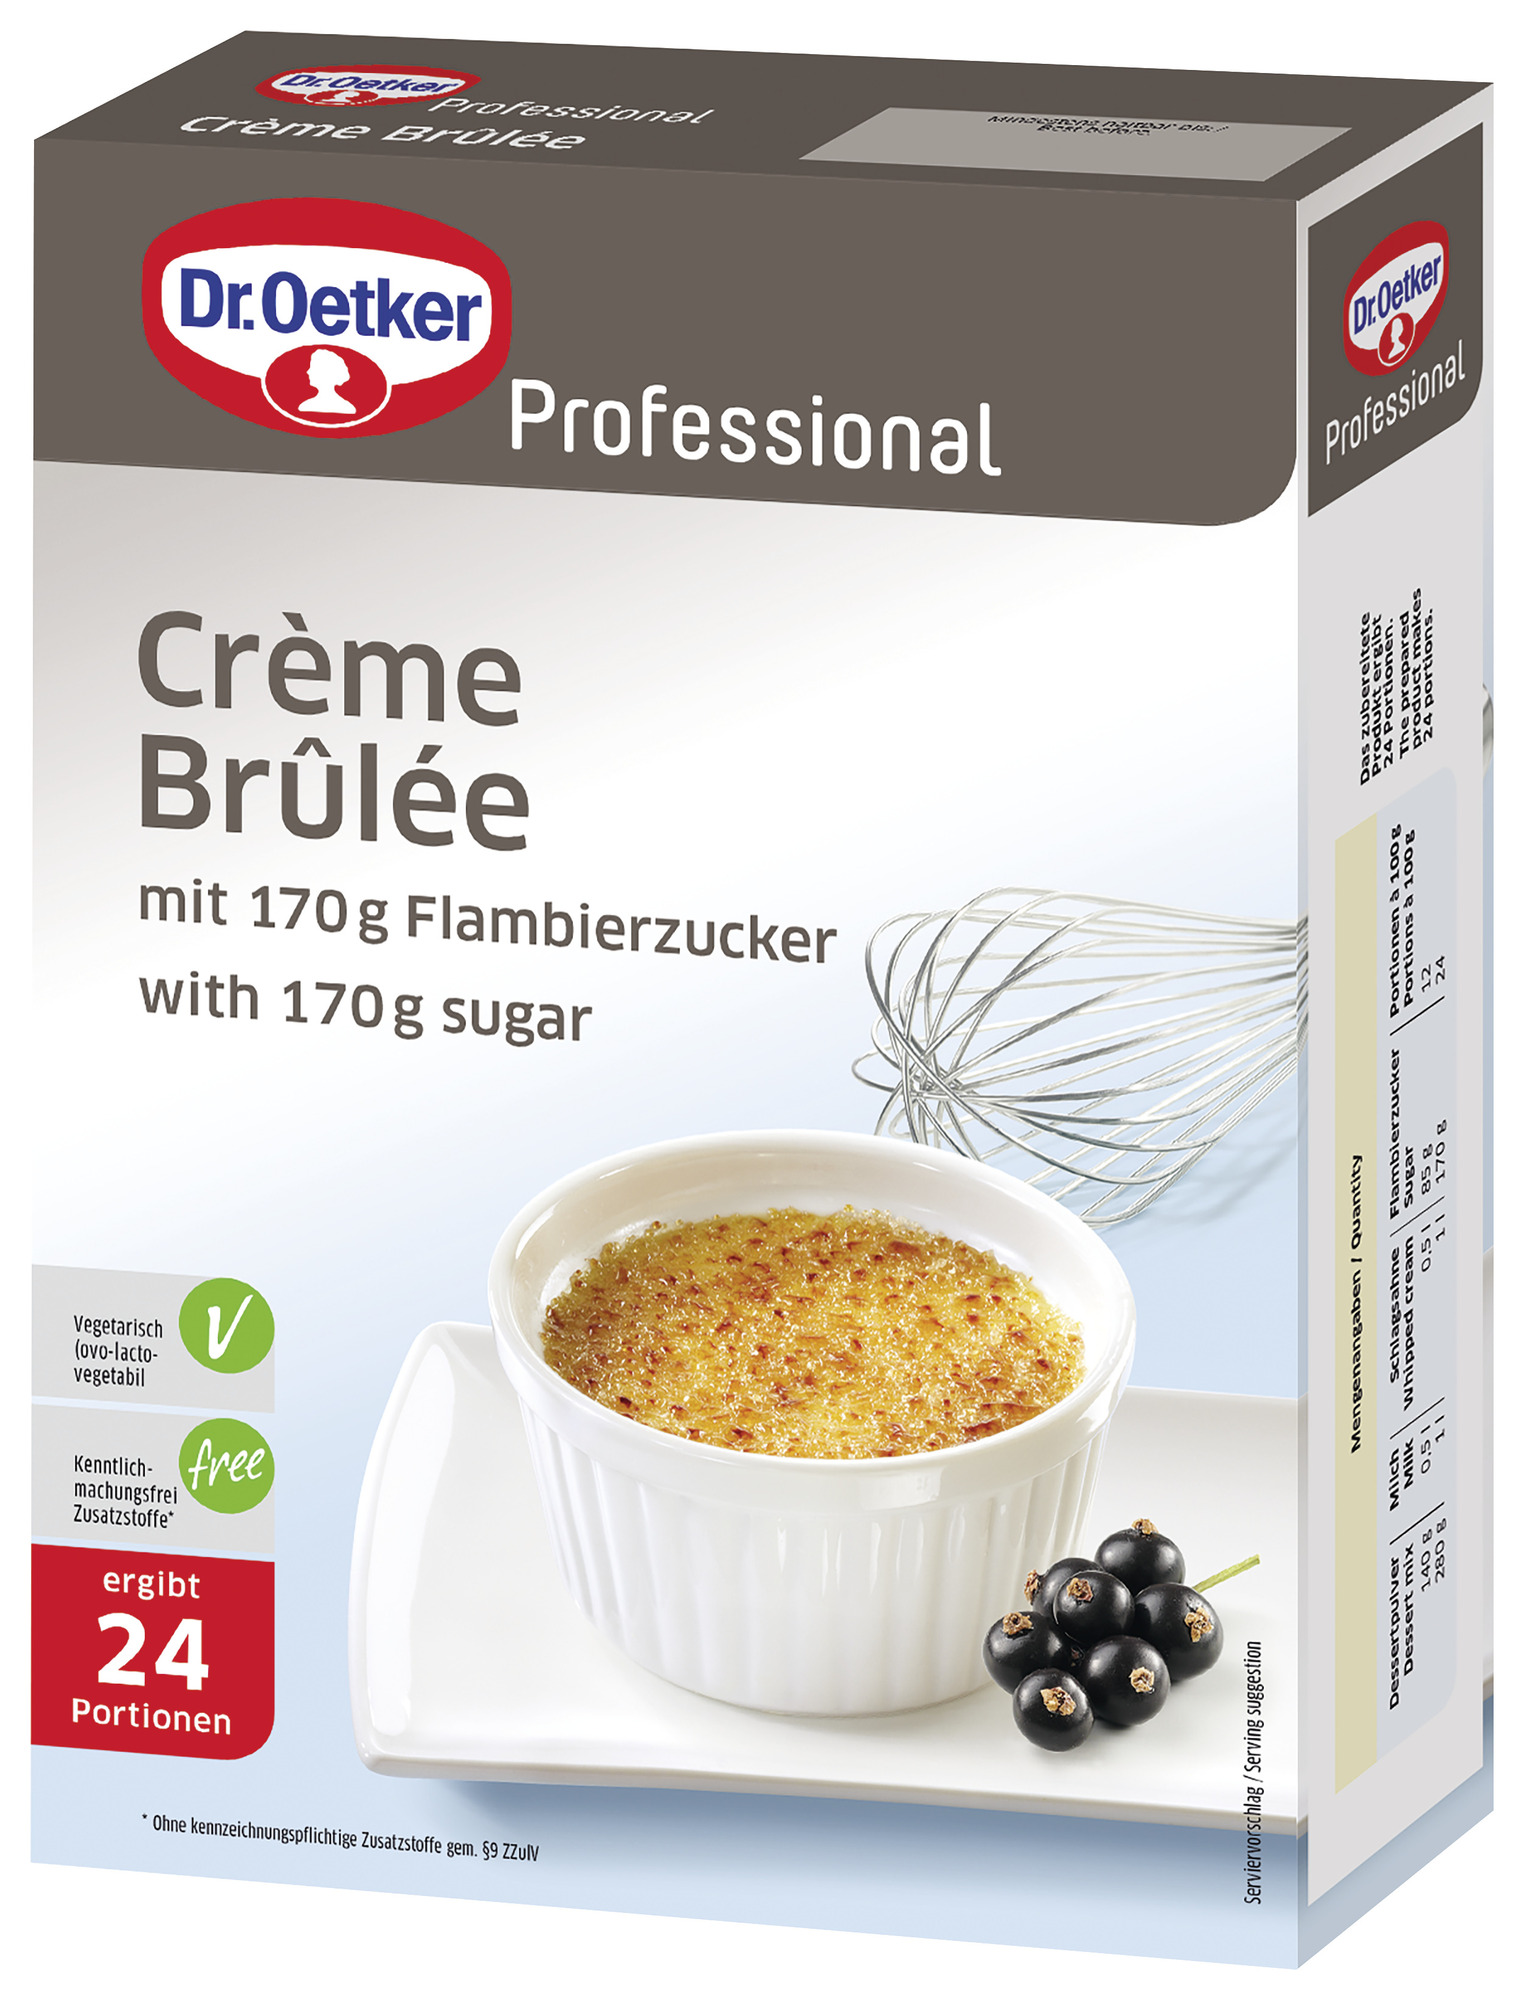 Crème Brûlée mit Flambierzucker 450g